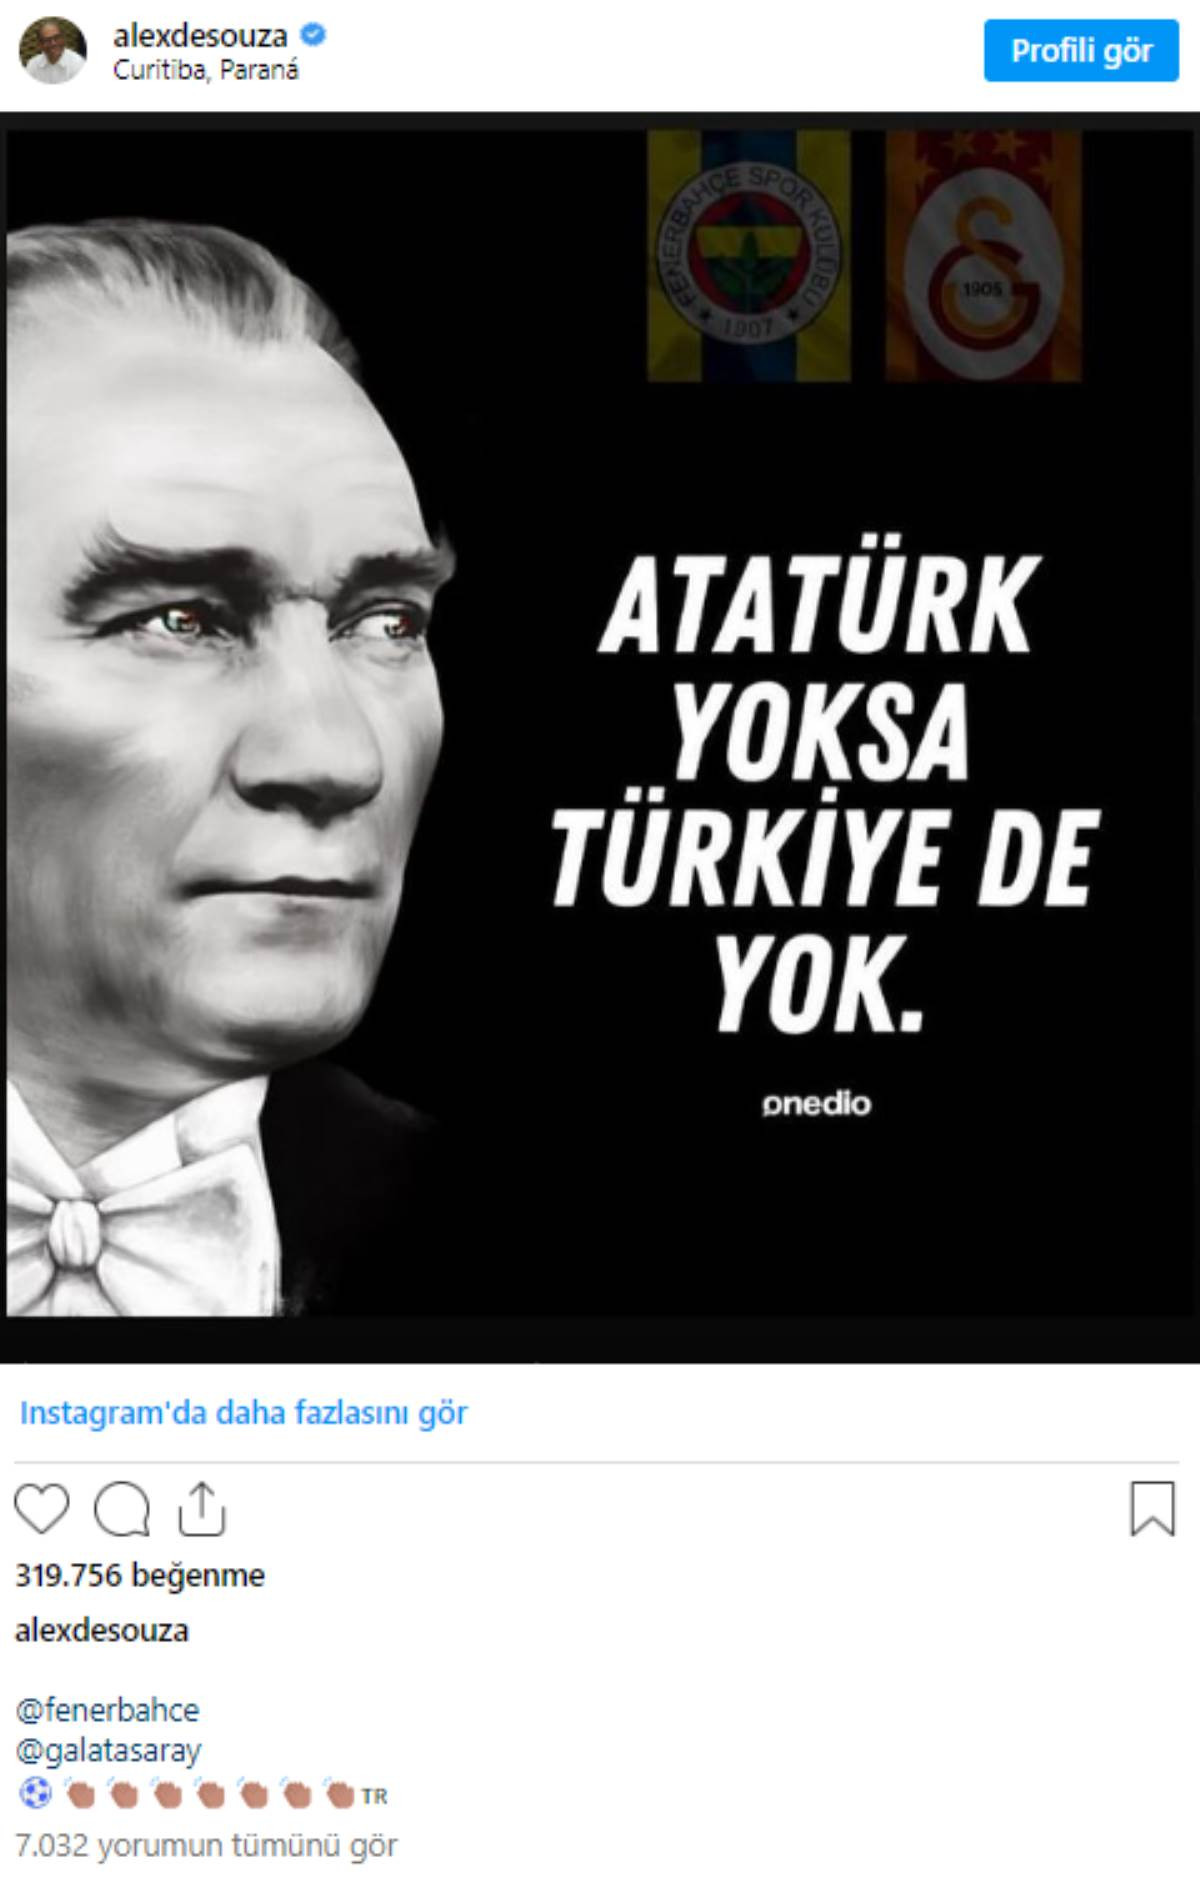 Alex Atatürk